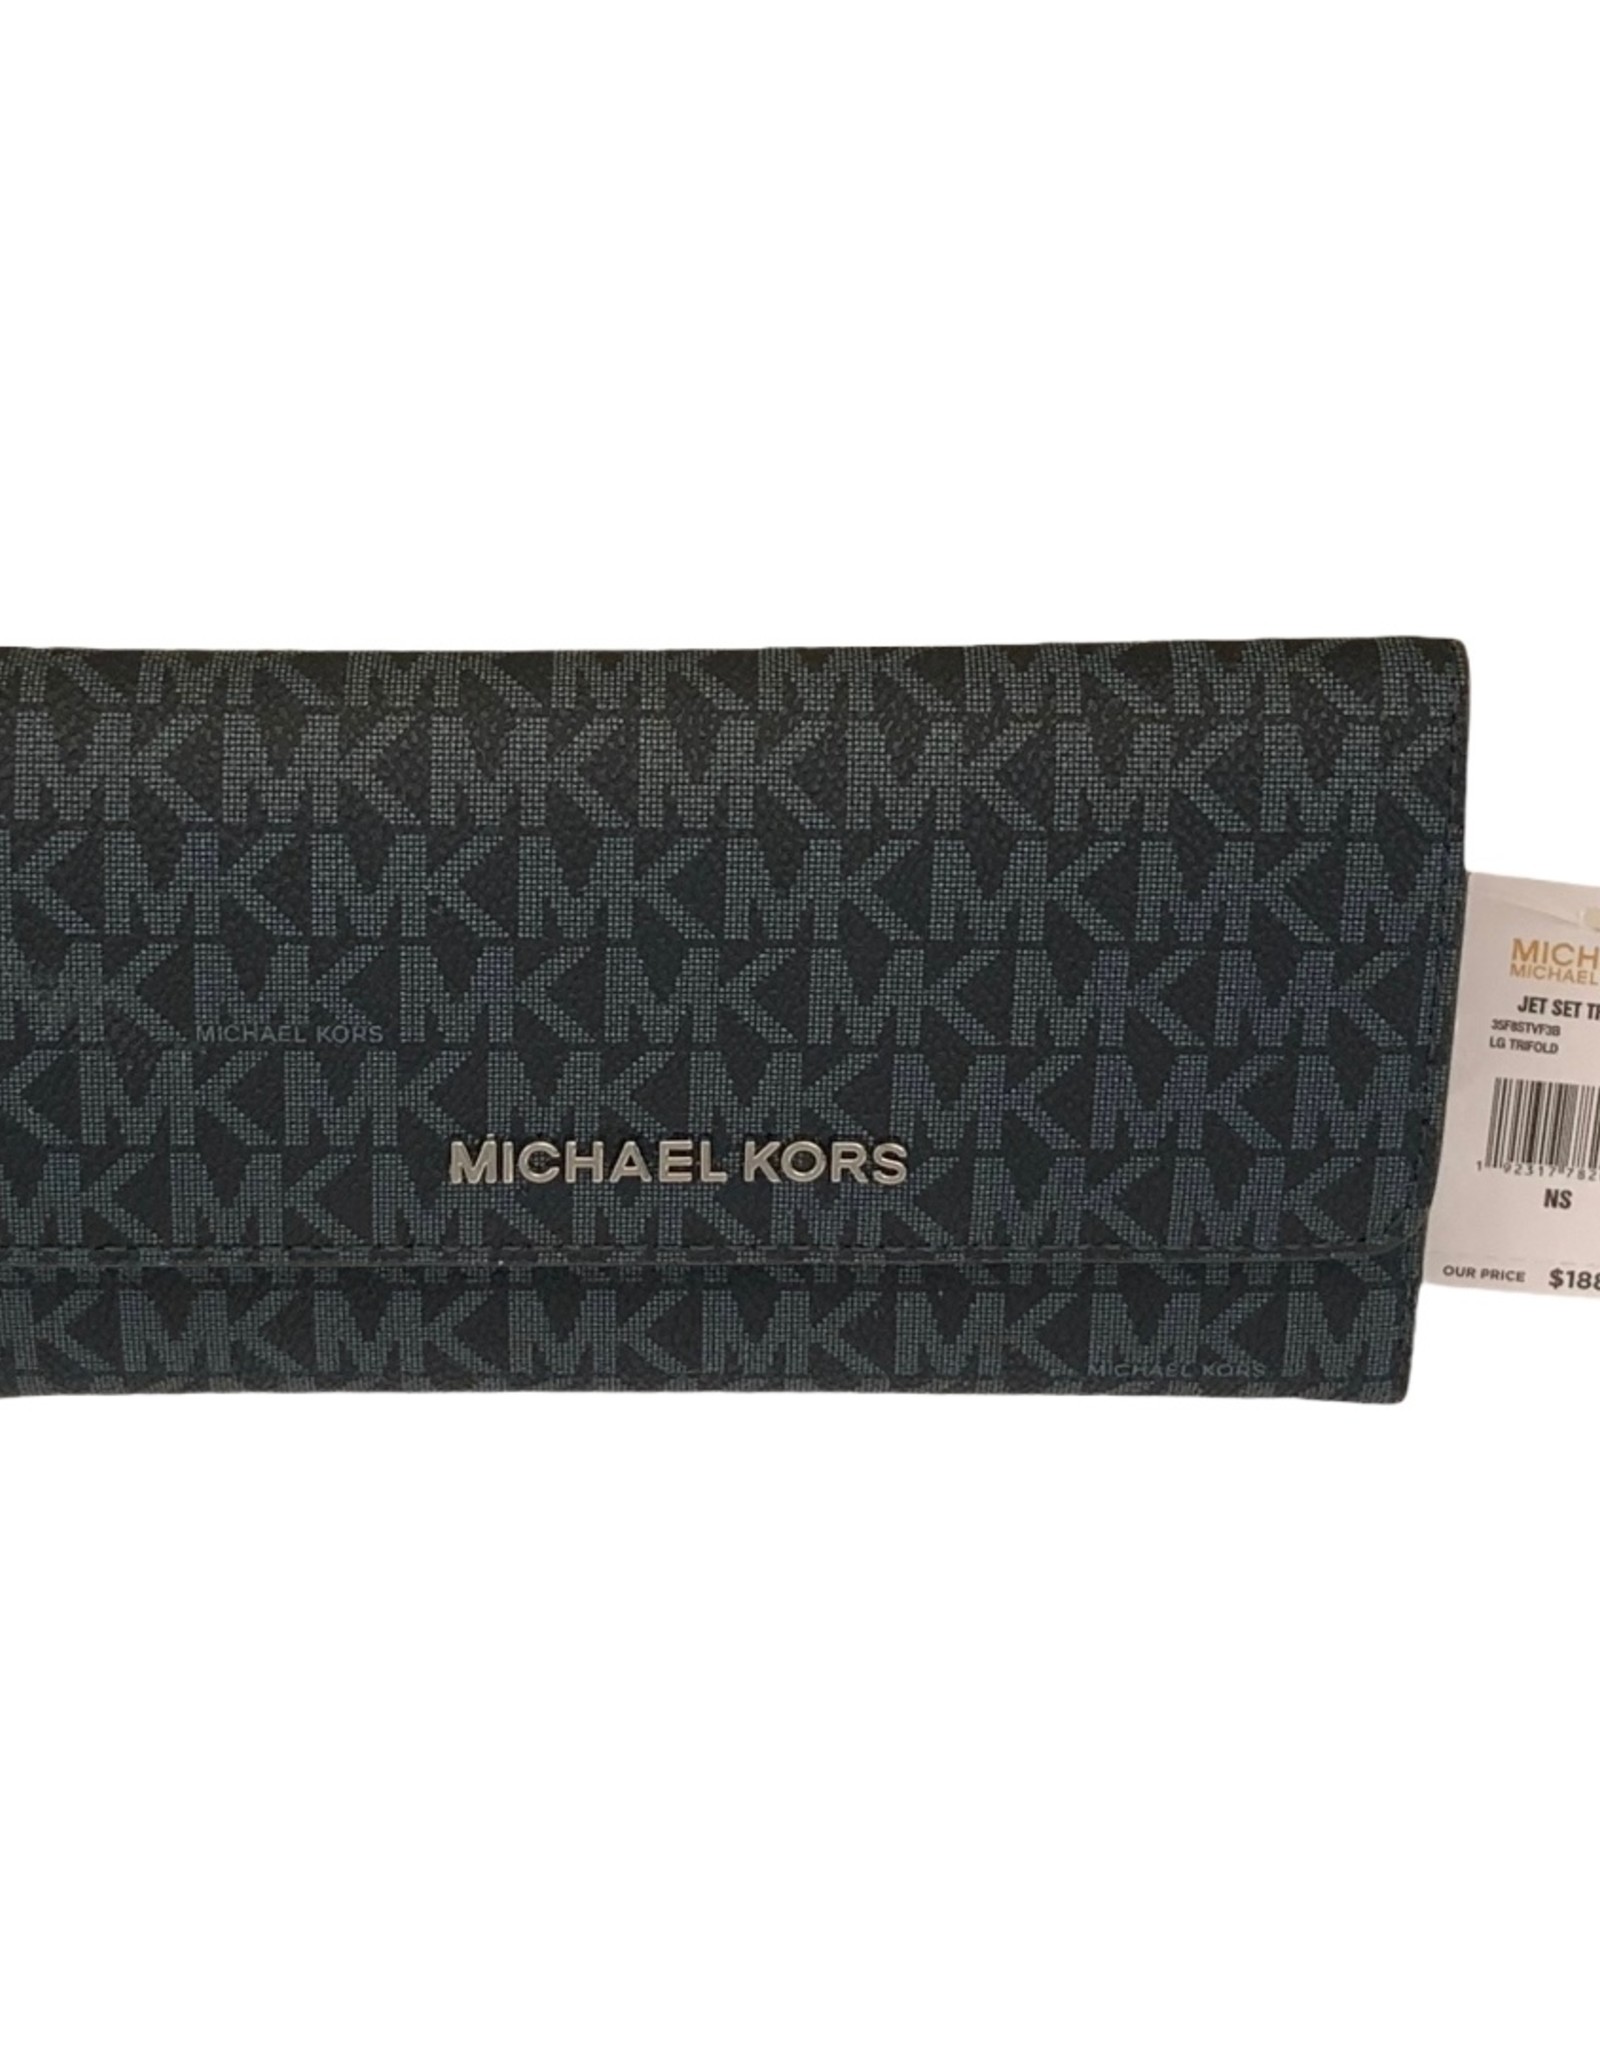 Michael Kors Jet Set Travel Continental Wallet  Macys